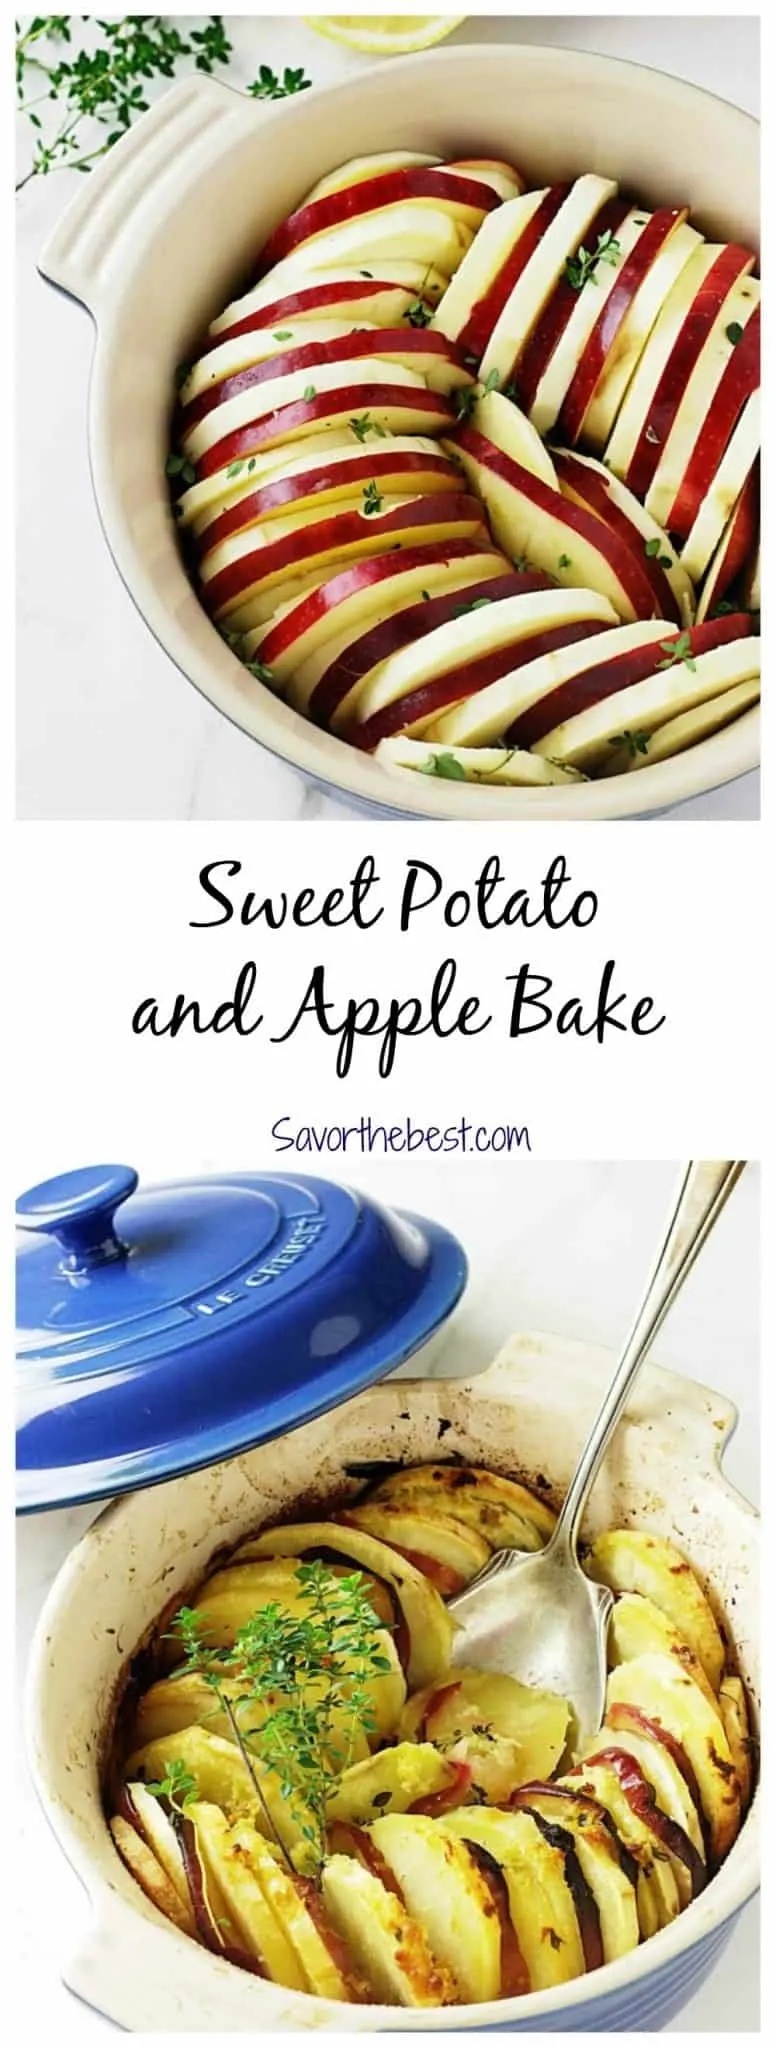 sweet potato and apple bake